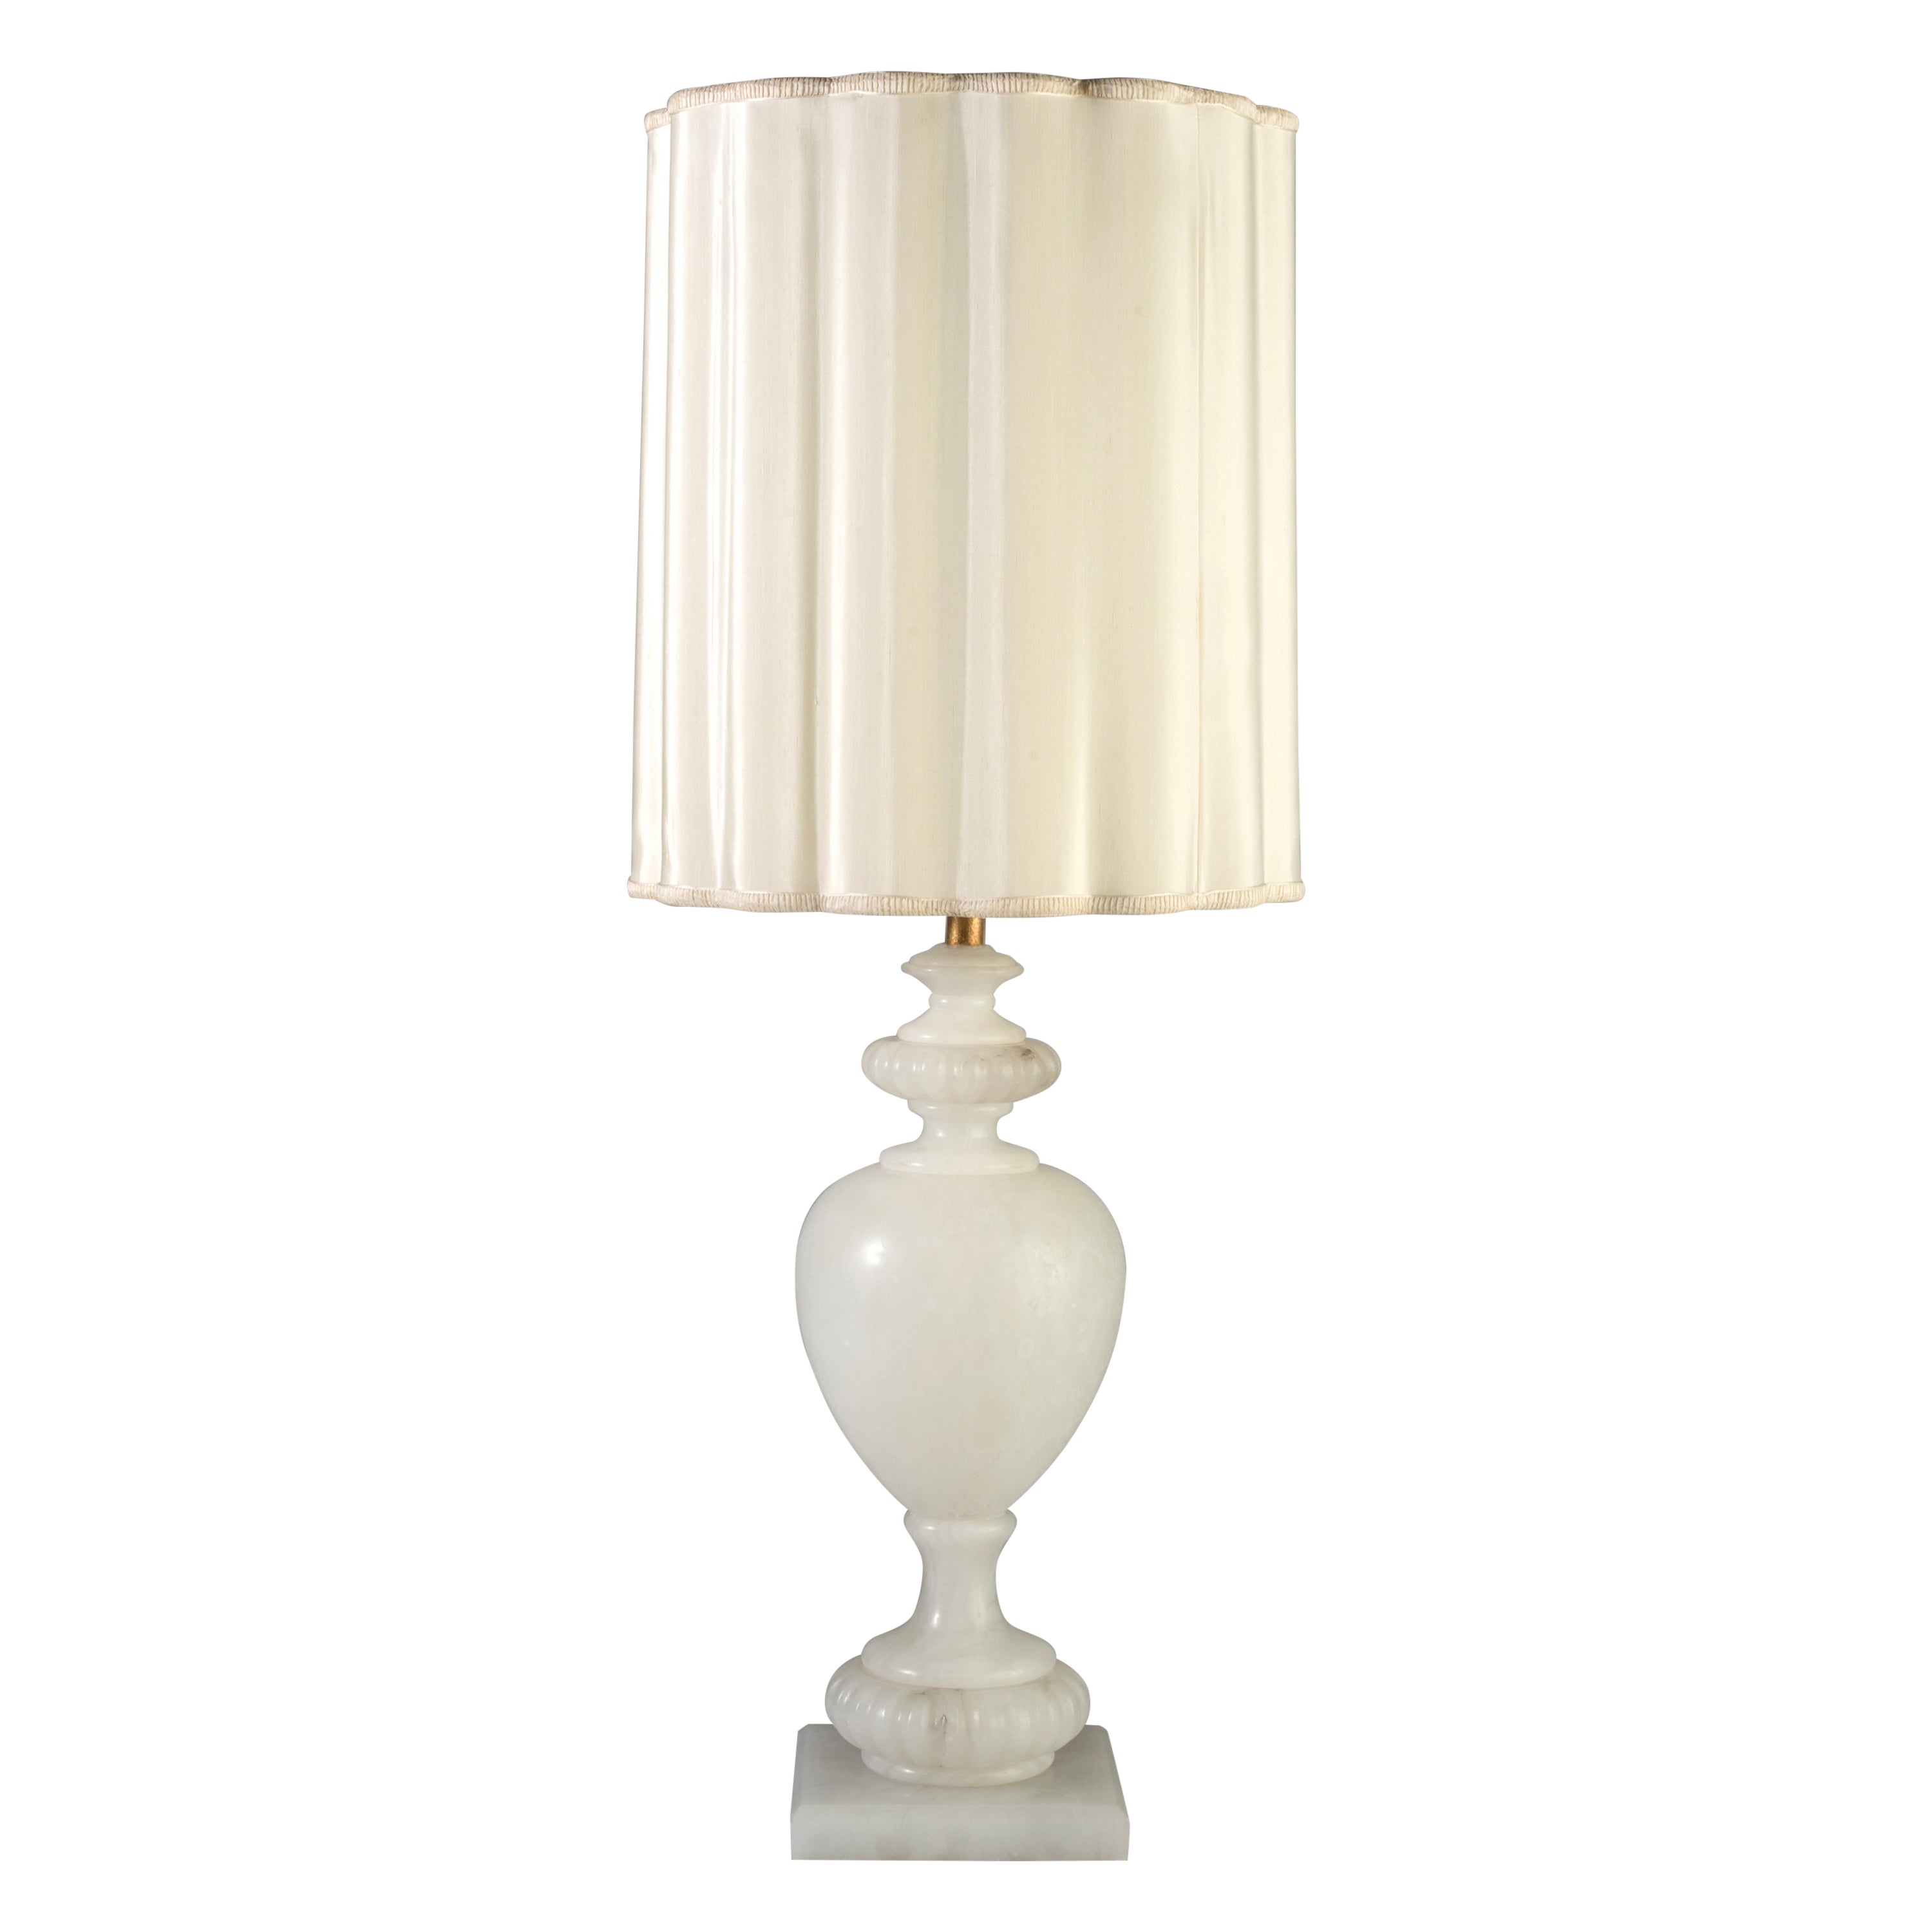 1950s Italian Neoclassical Alabaster Vase Urn Baluster Marbro Style Lamp